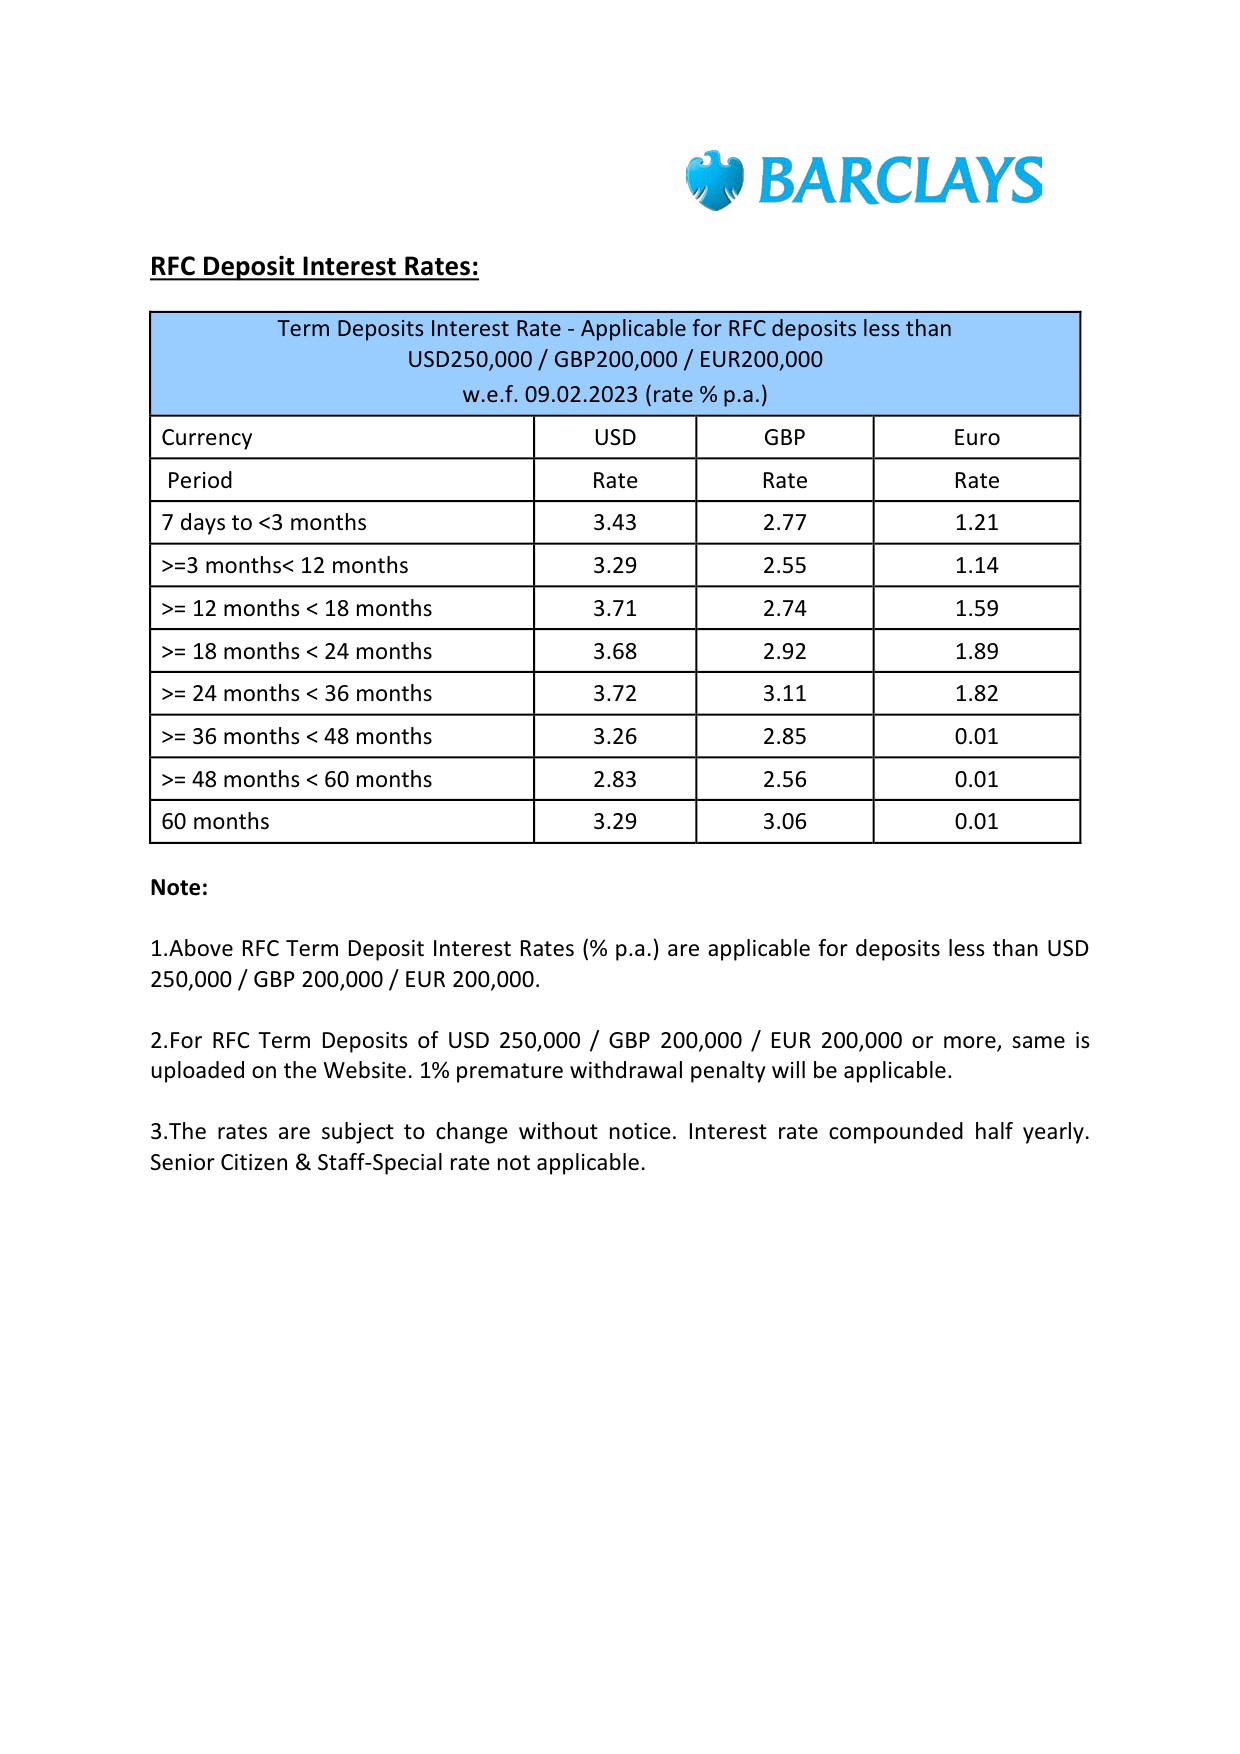 Fixed Deposit Interest Rates of Barclays Bank PLC - Image 4